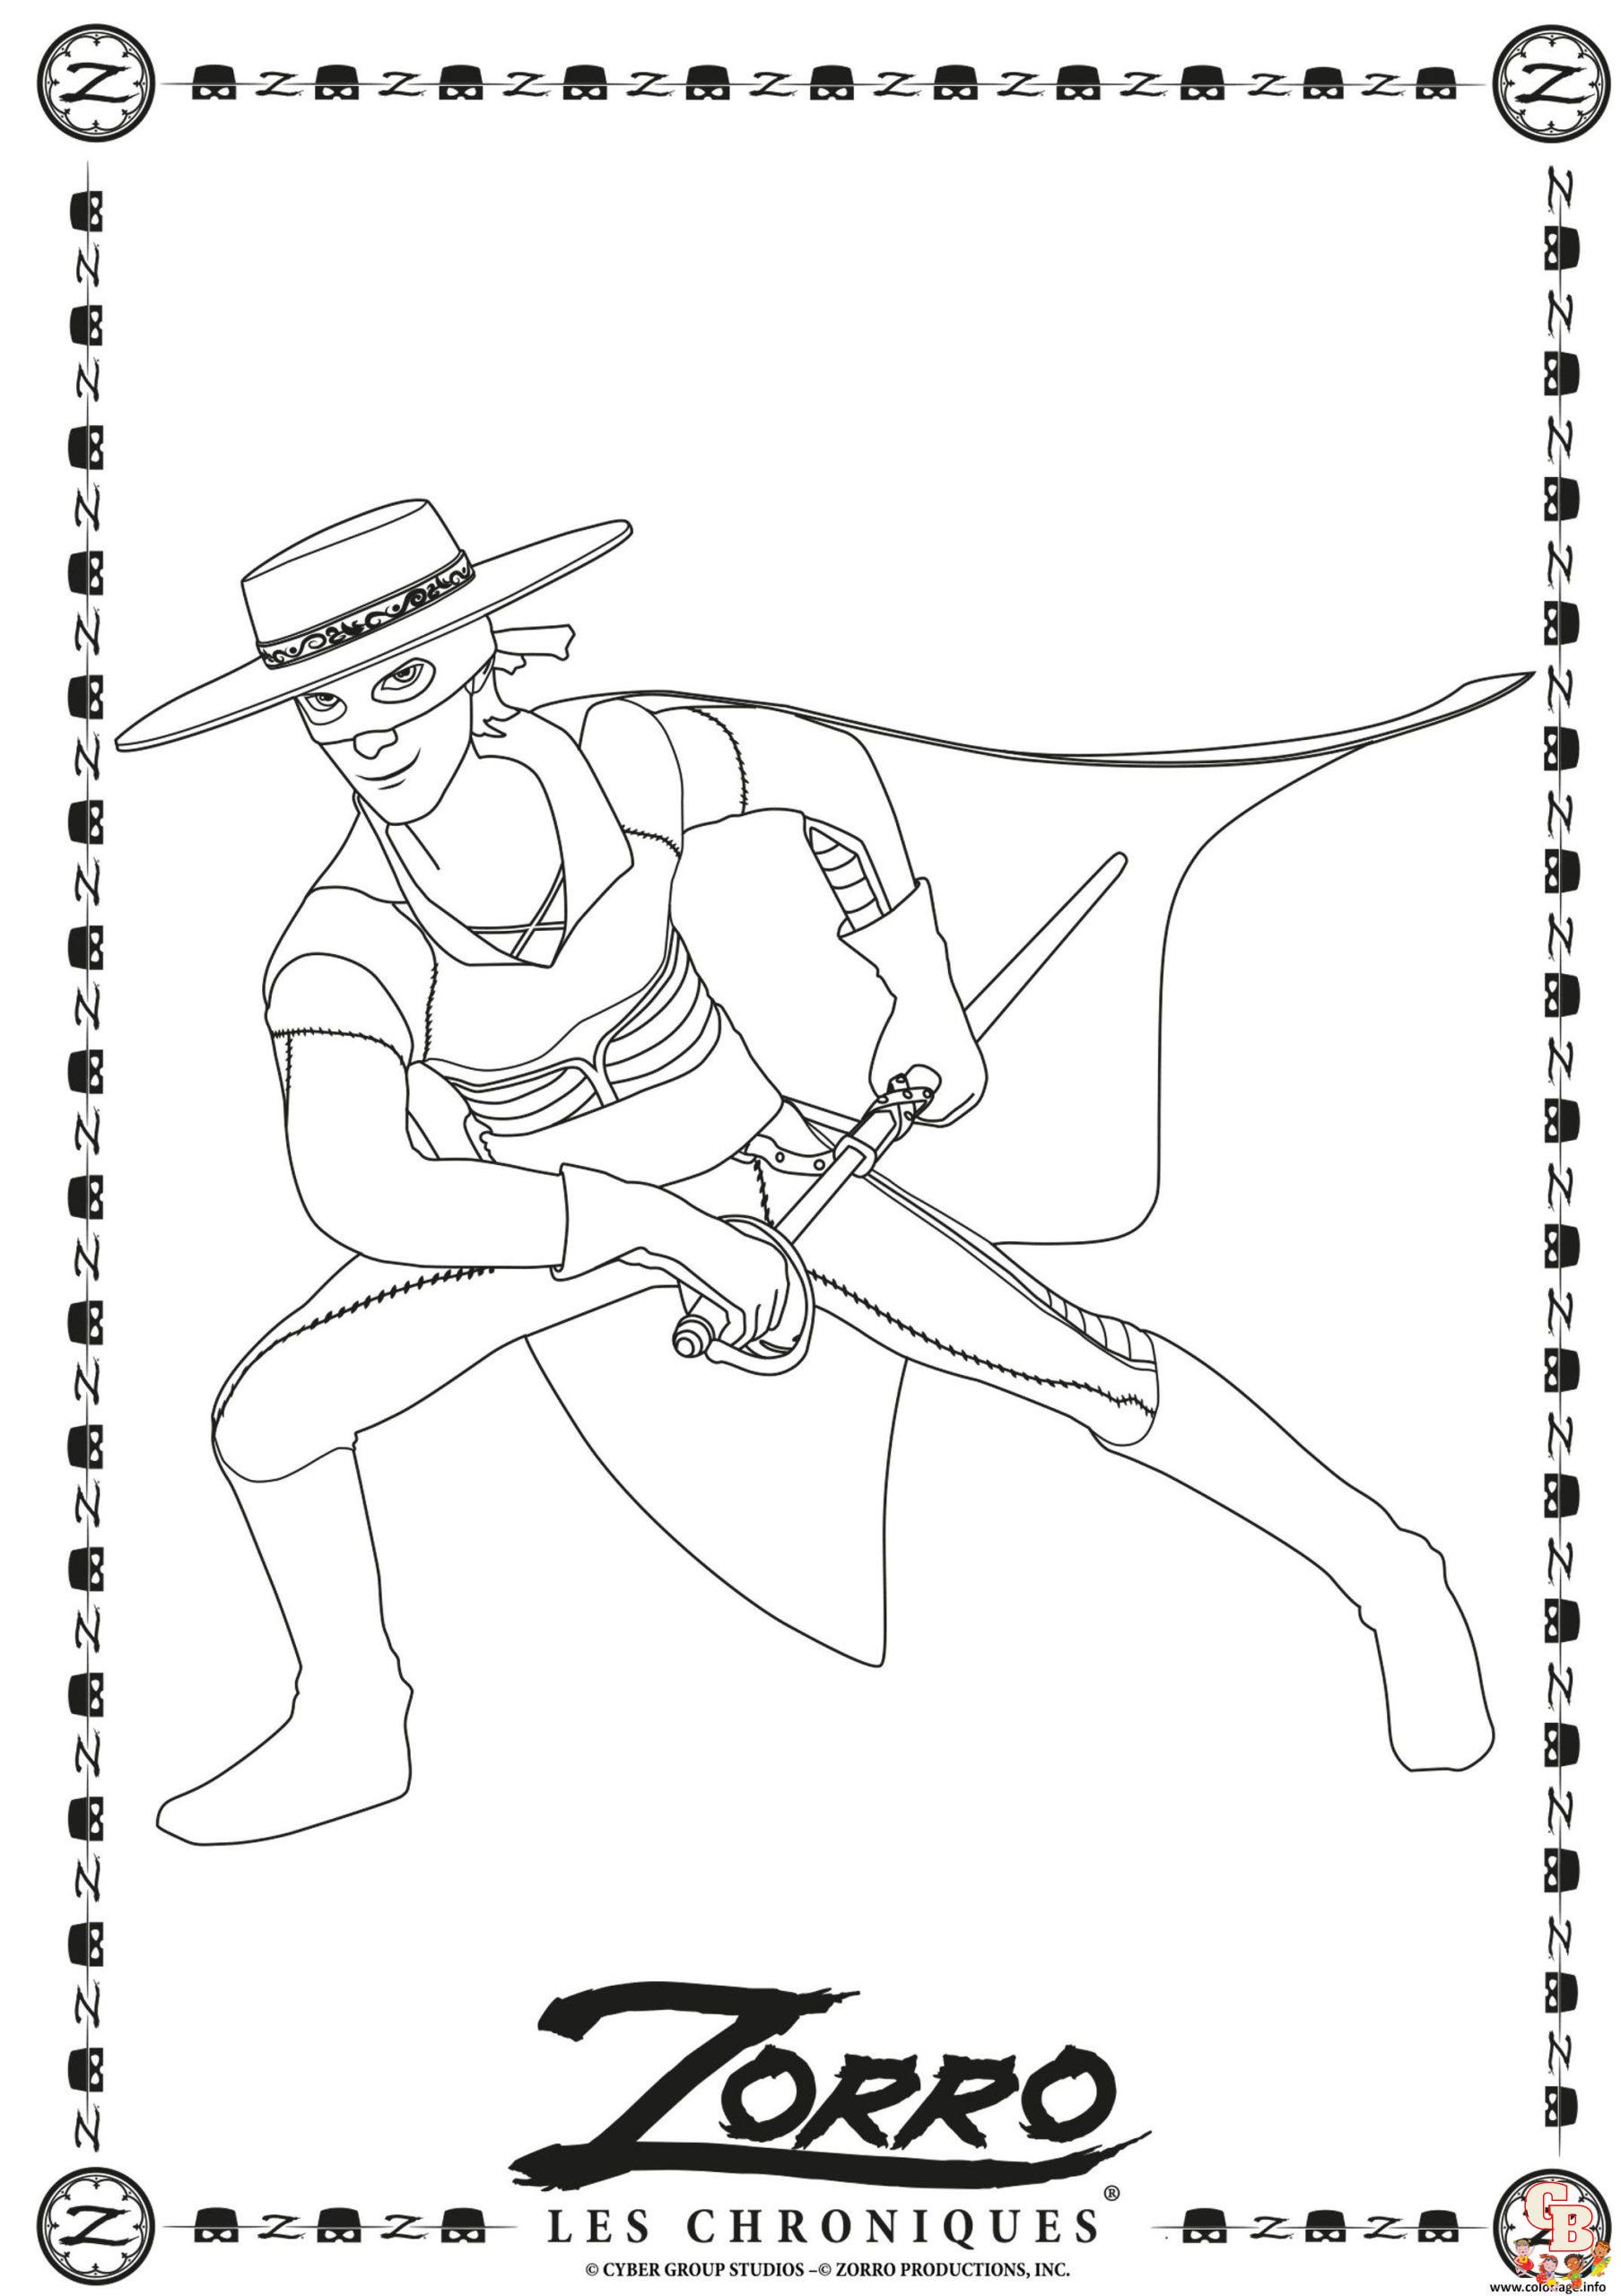 Dibujo de Zorro para colorear